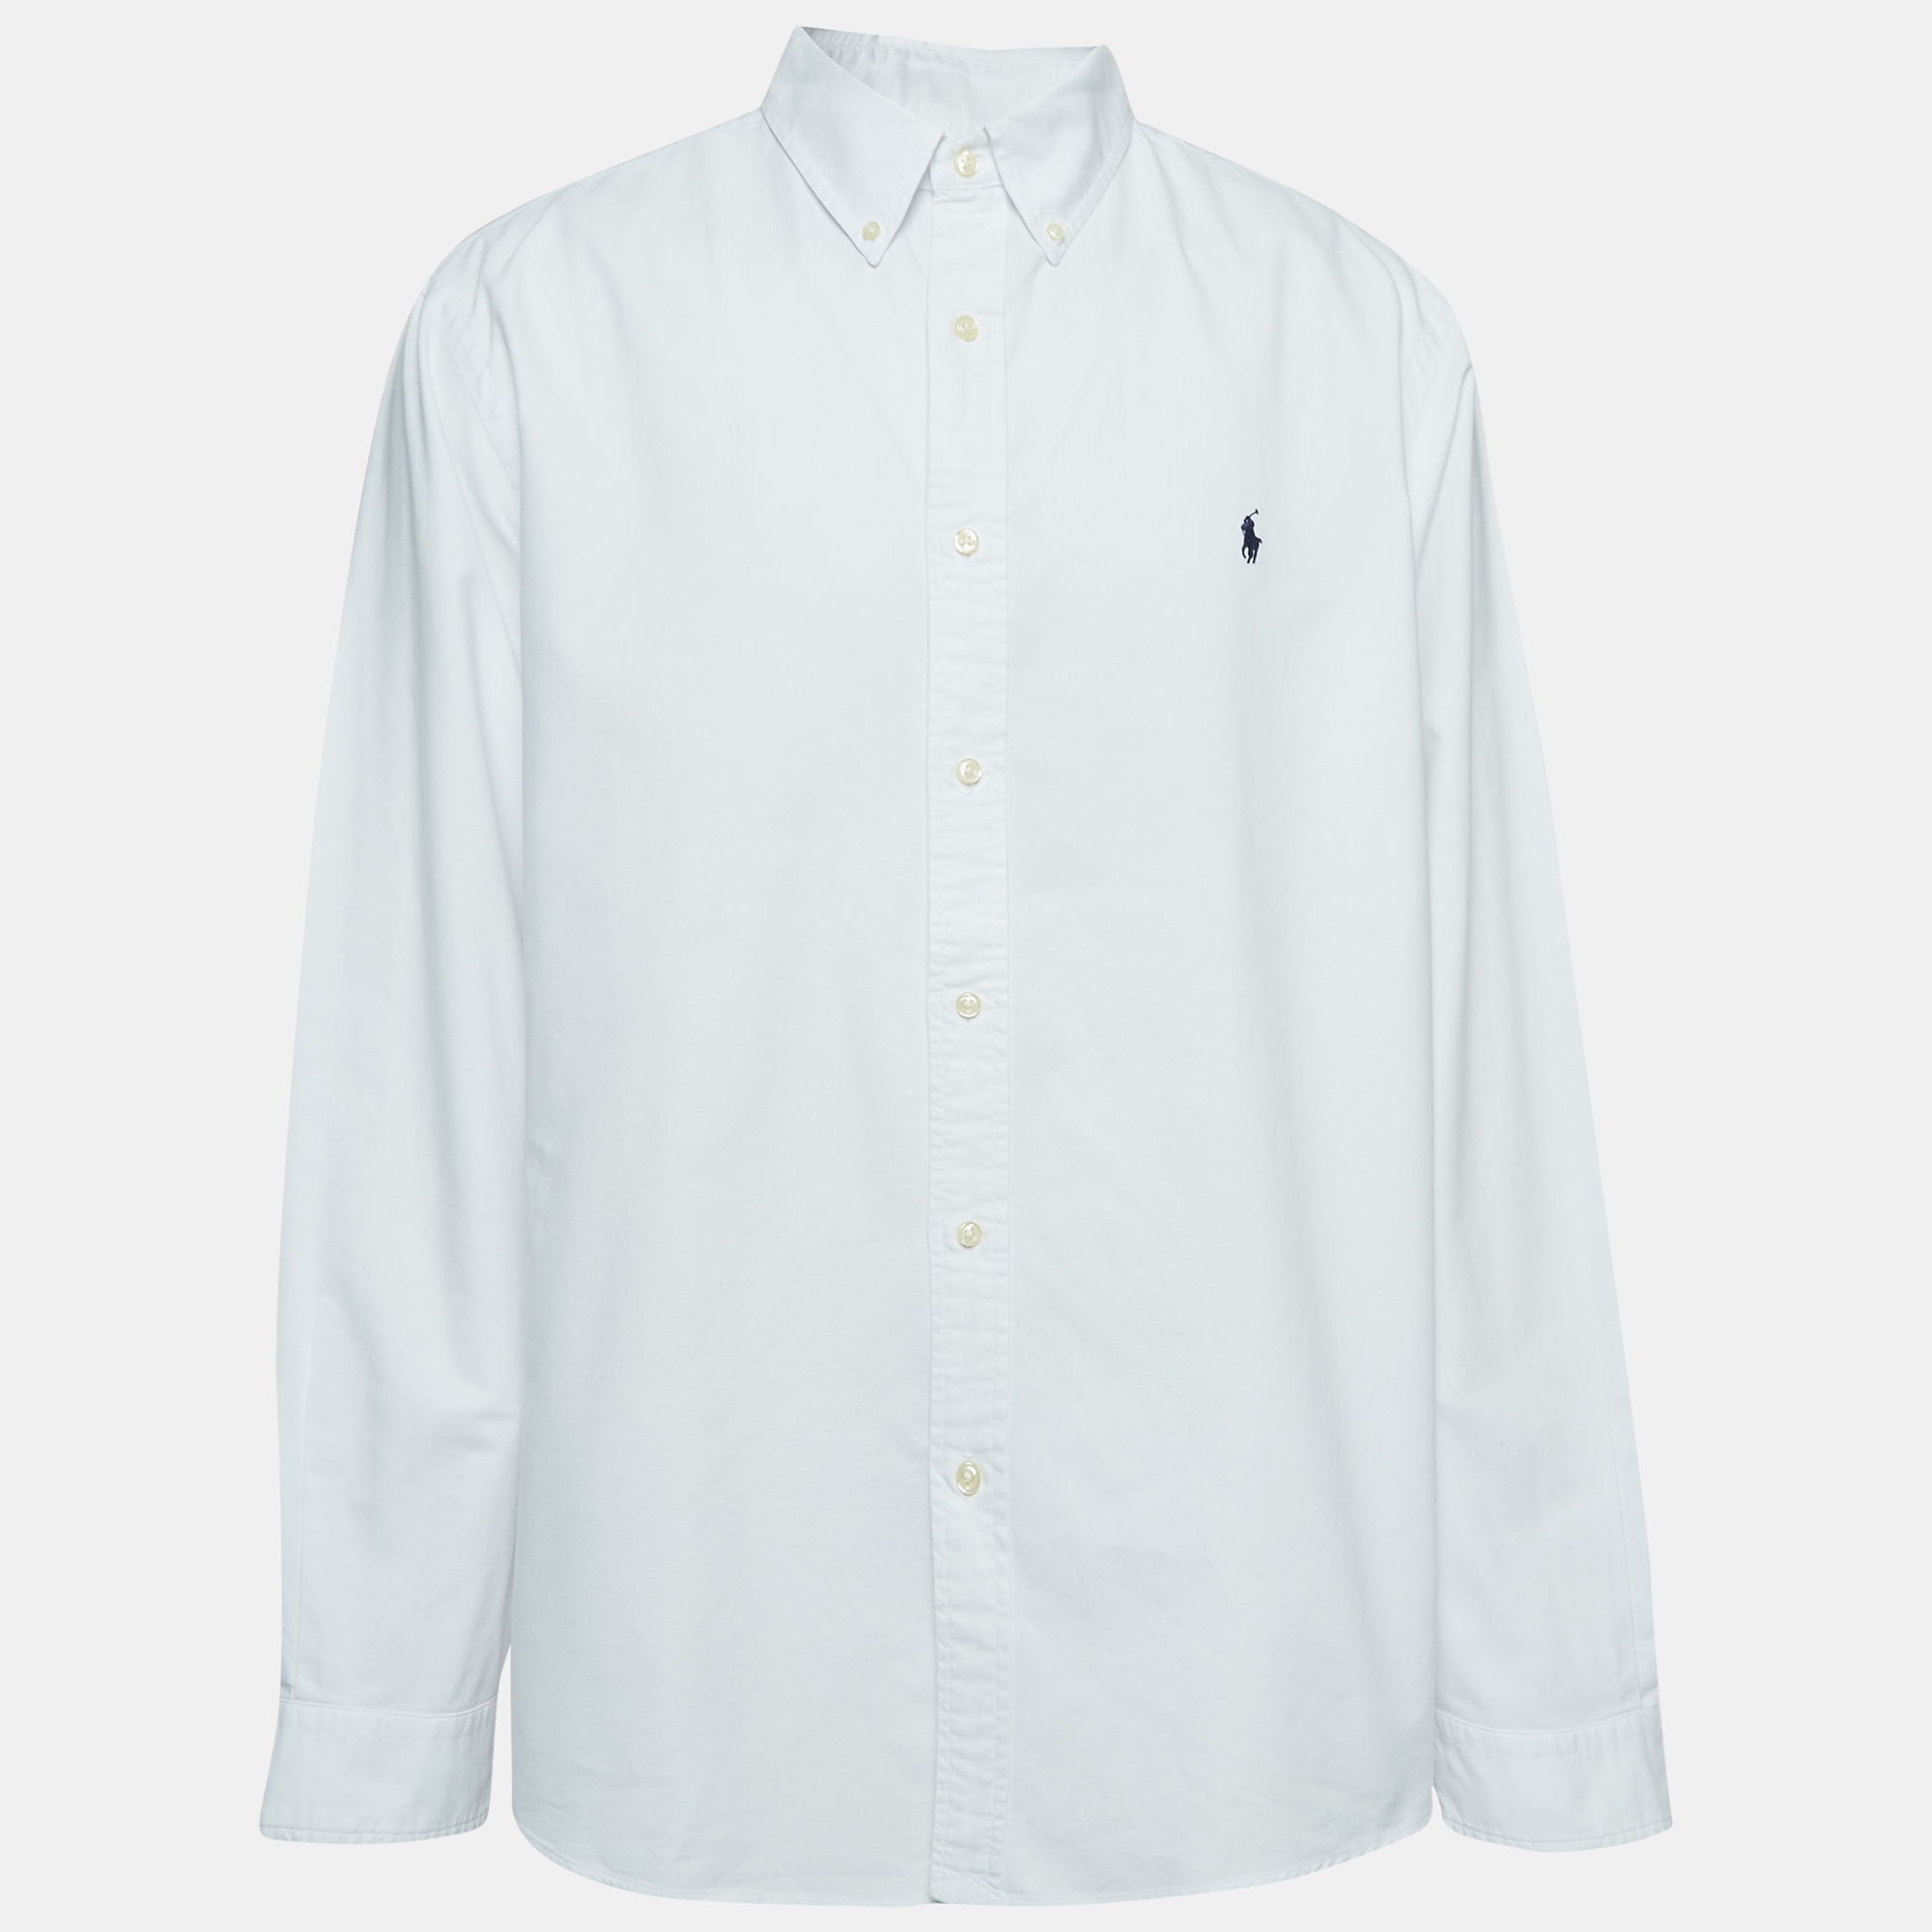 Pre-owned Ralph Lauren White Cotton Custom Fit Shirt Xxl